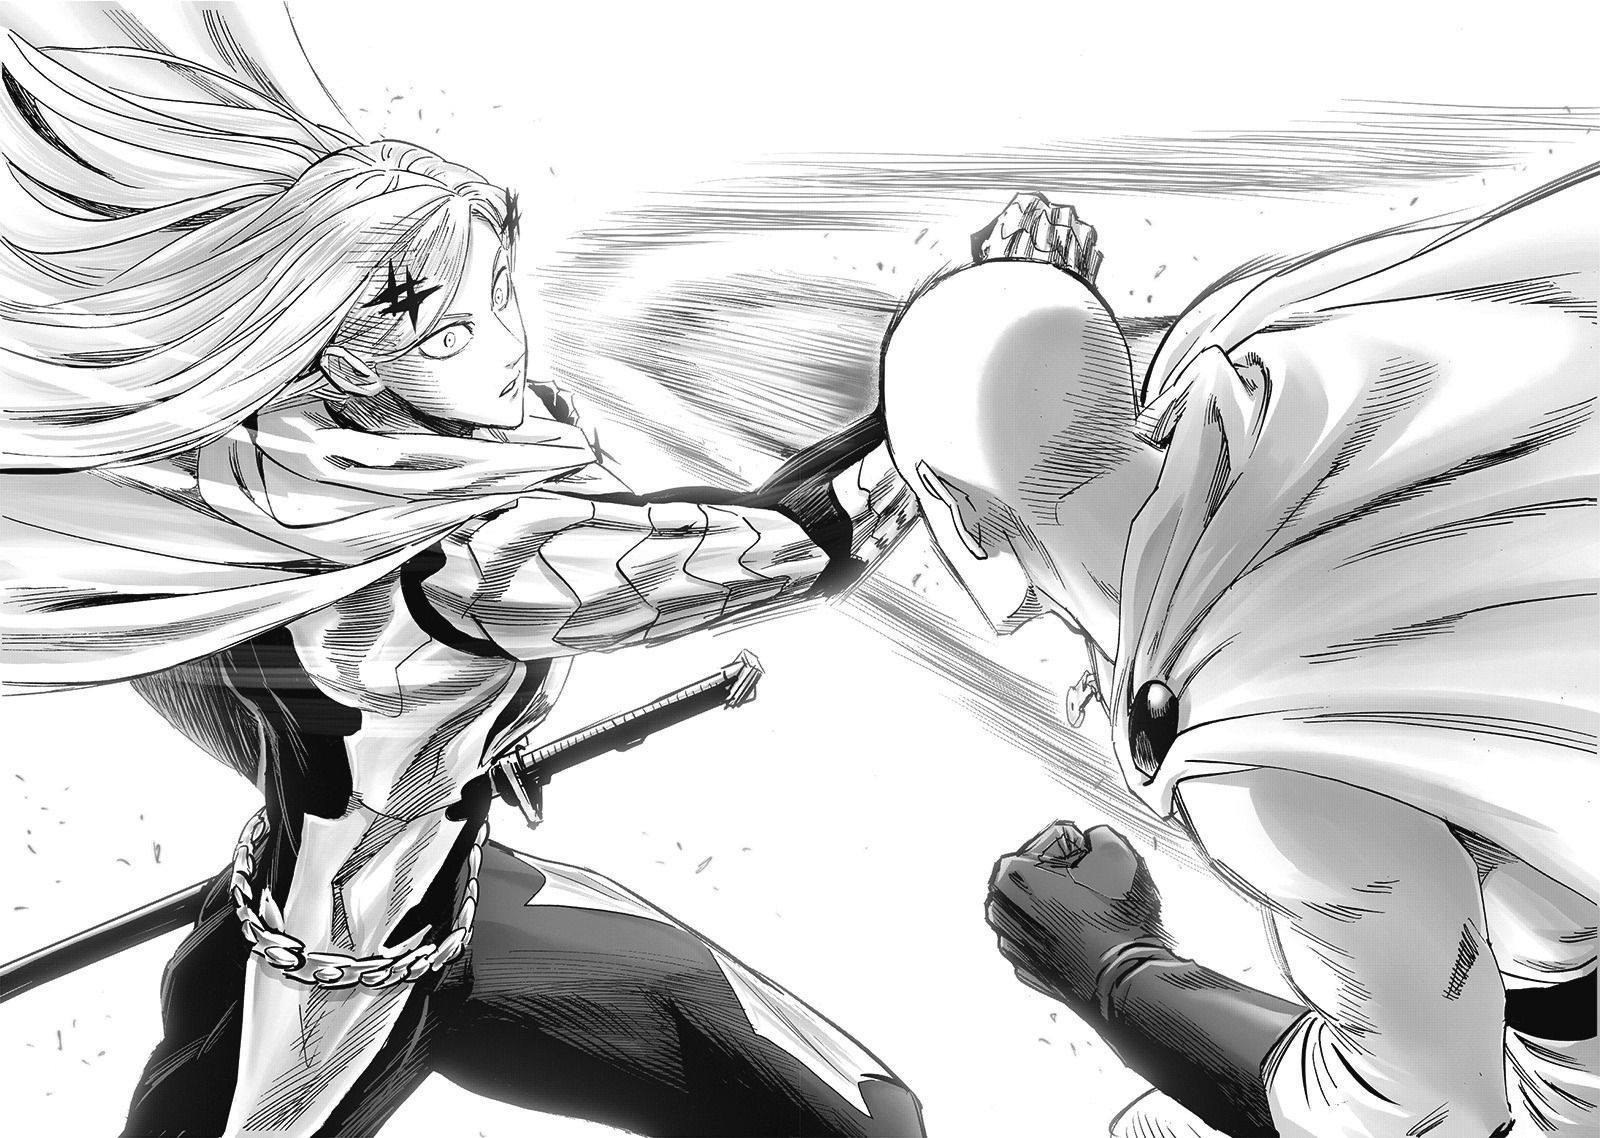 Flashy Flash and Saitama as seen in One Punch Man Chapter 194 (Image via Shueisha)